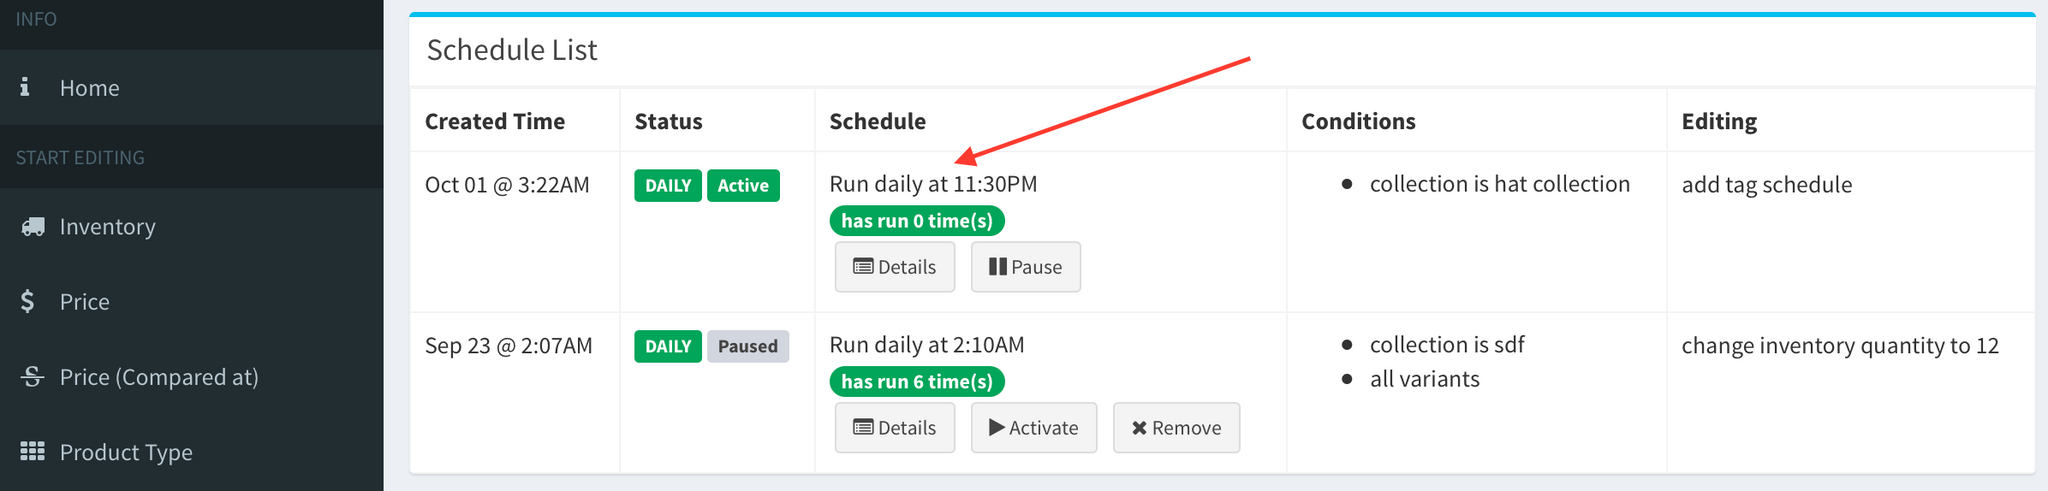 Shopify App - Bulk Product Edit by Hextom - Schedule Task Tutorial